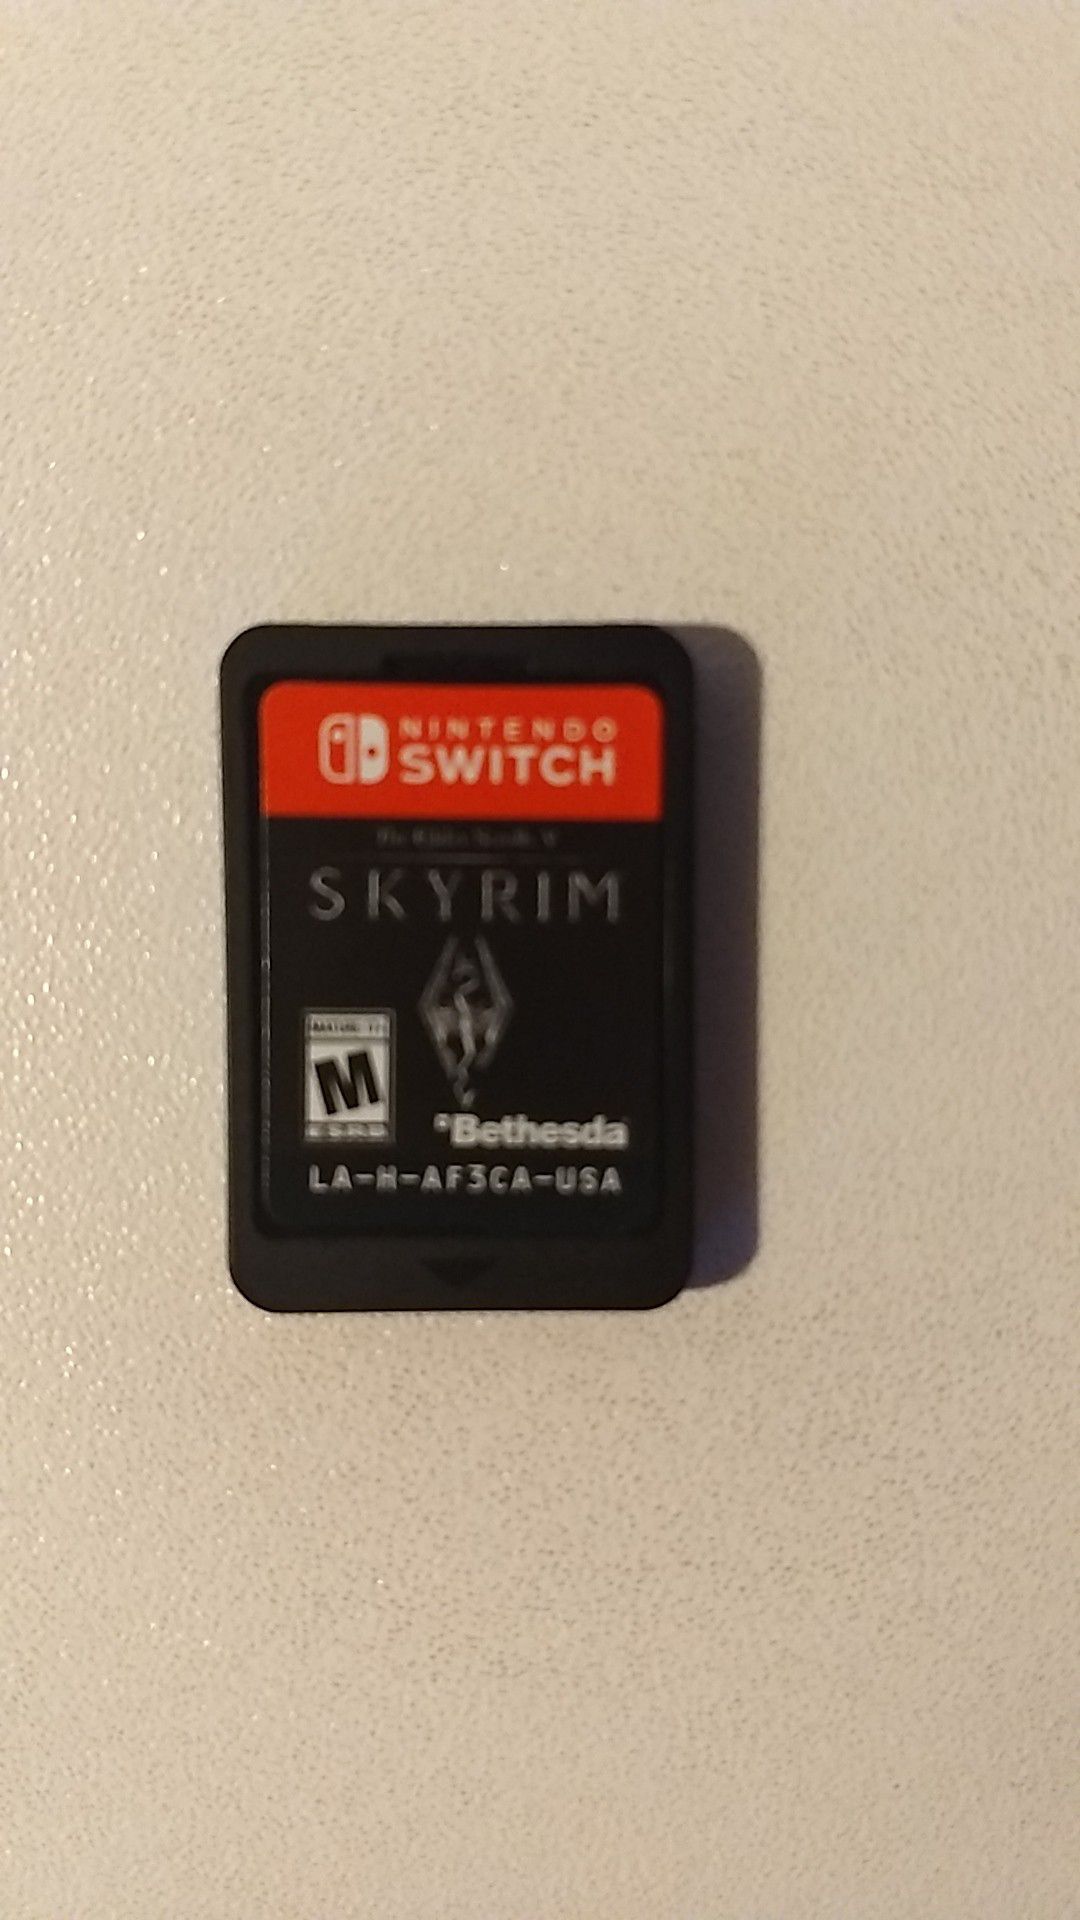 Skyrim, Nintendo Switch game